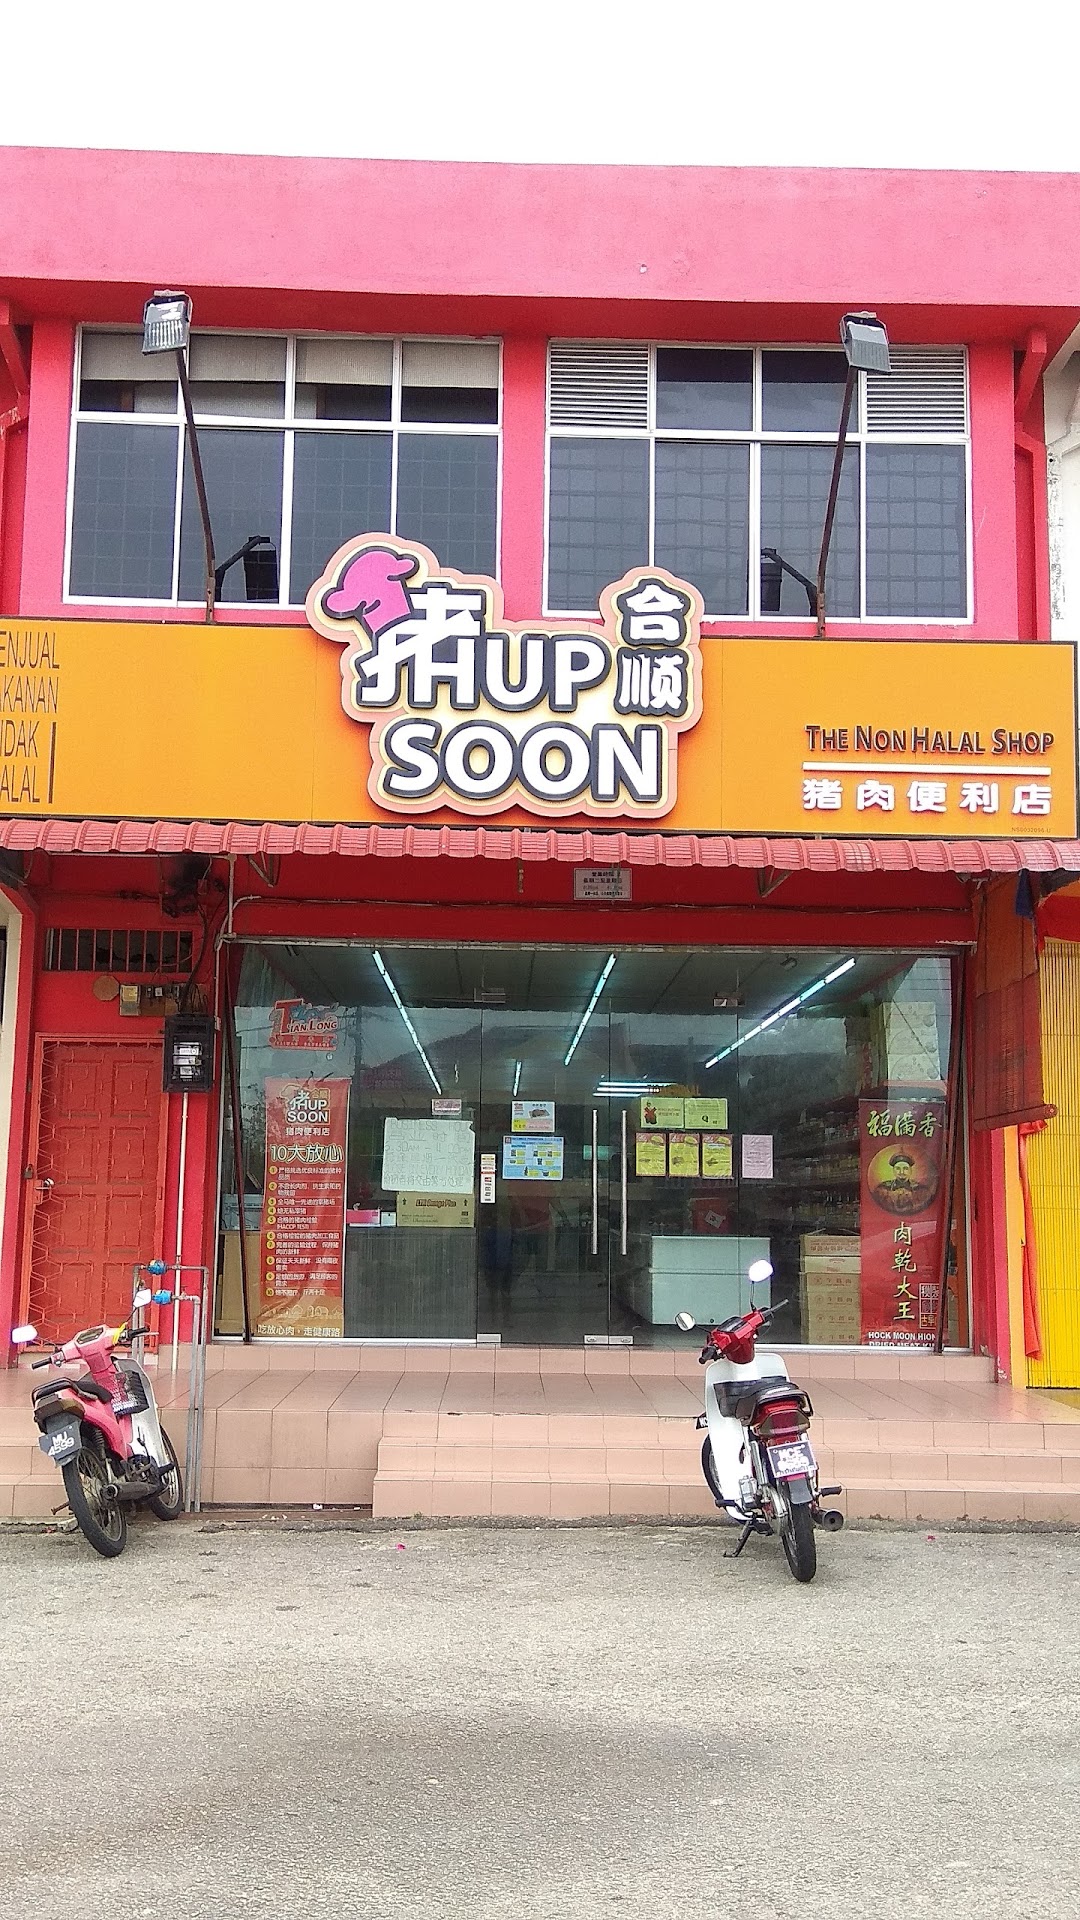 Hup Soon The Non-Halal Shop 合顺猪肉店